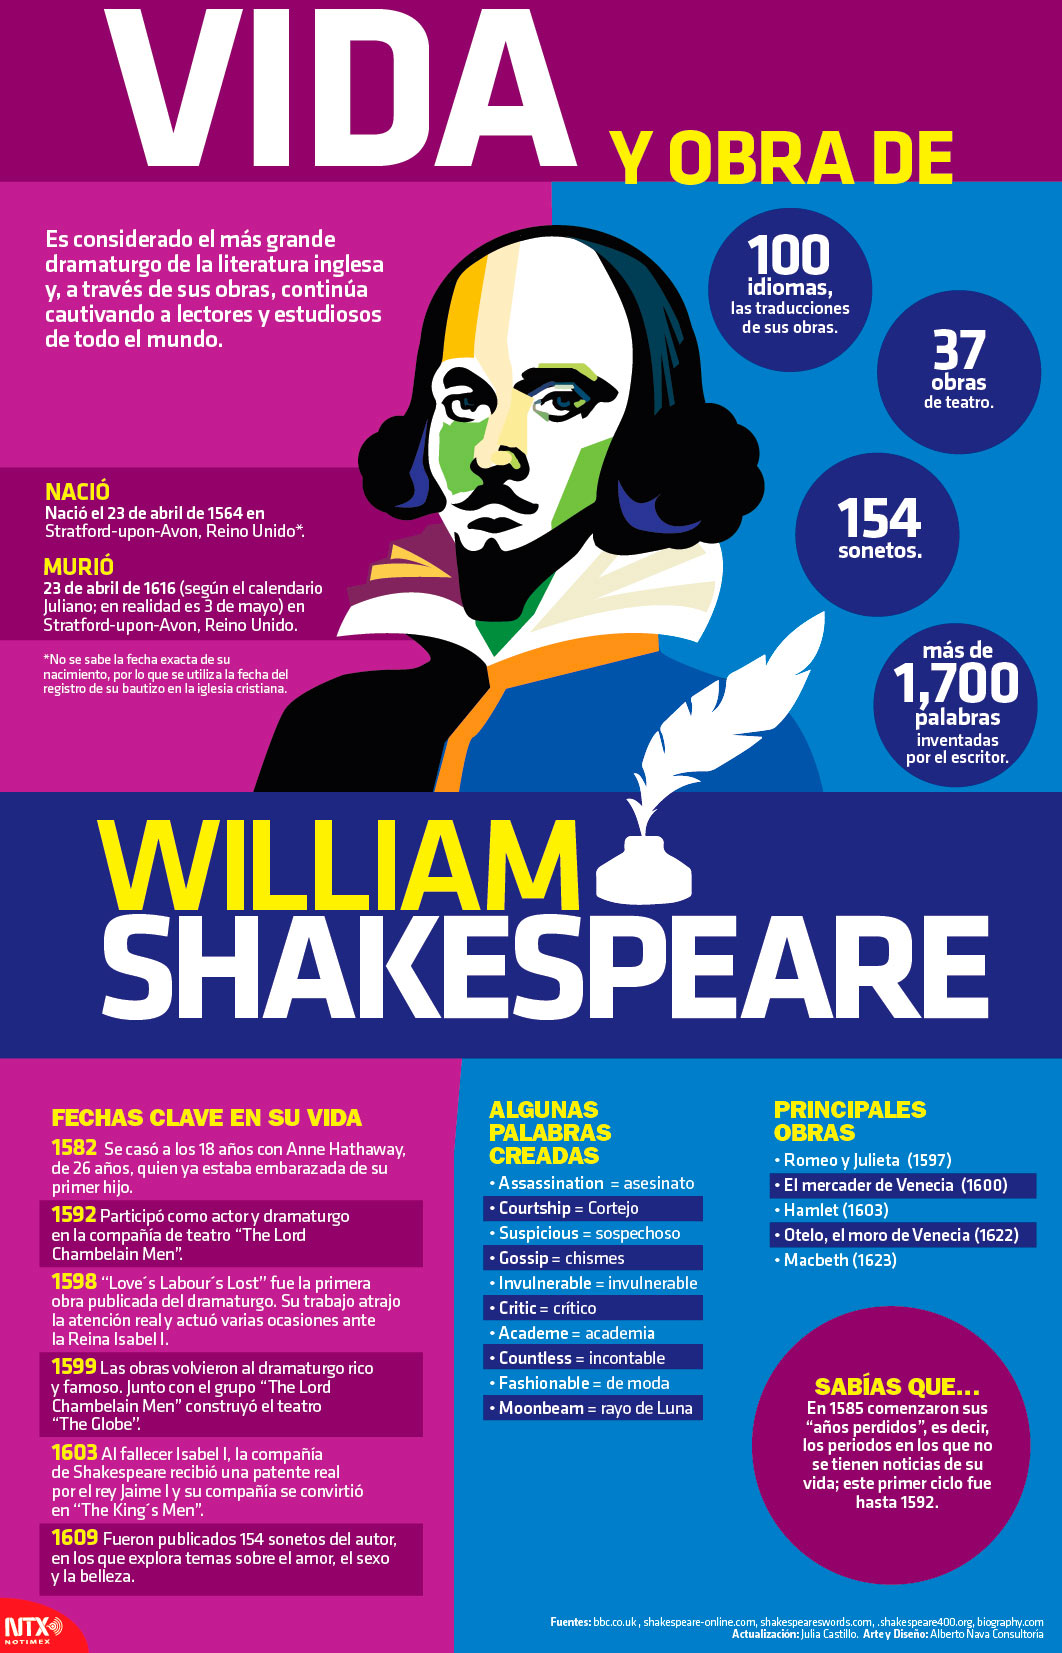 Vida y obra de William Shakespeare